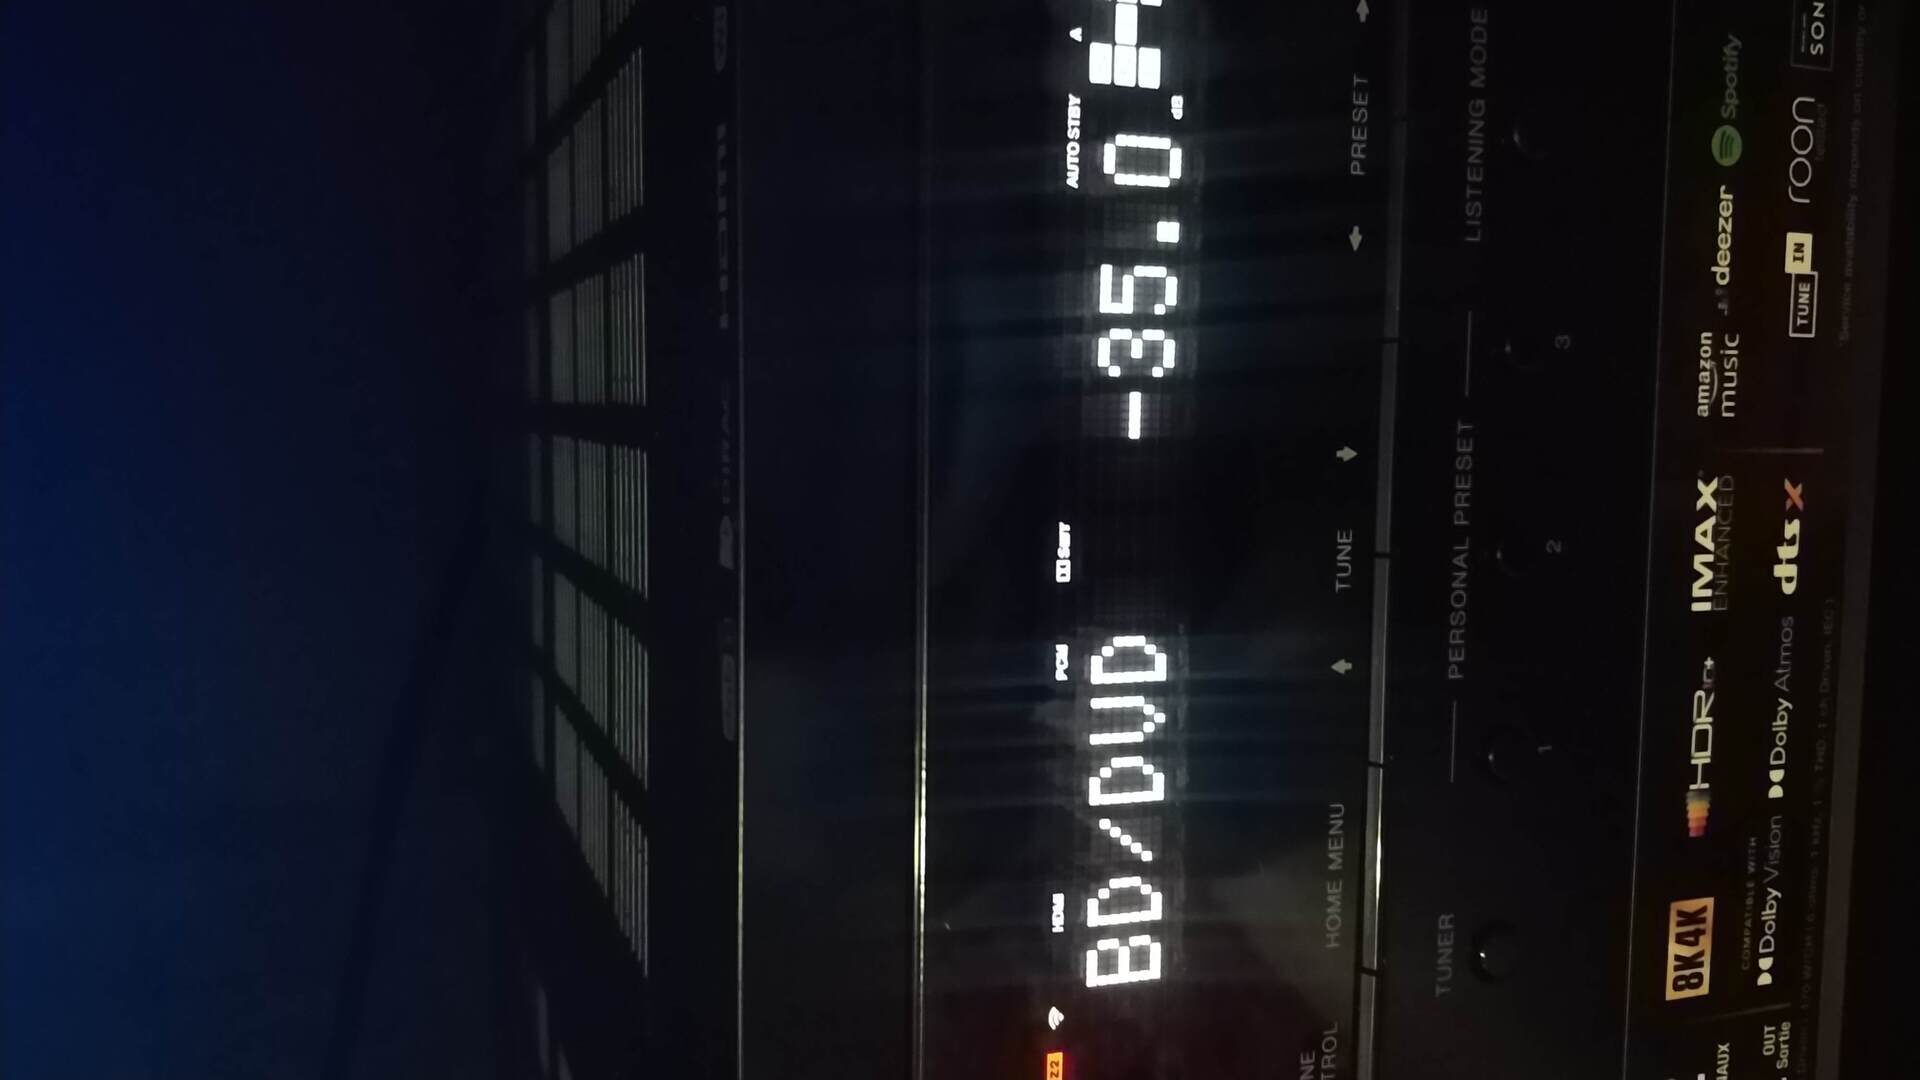 Горит на дисплее лифта надпись Fire. 13 xos launcher появилось на экране